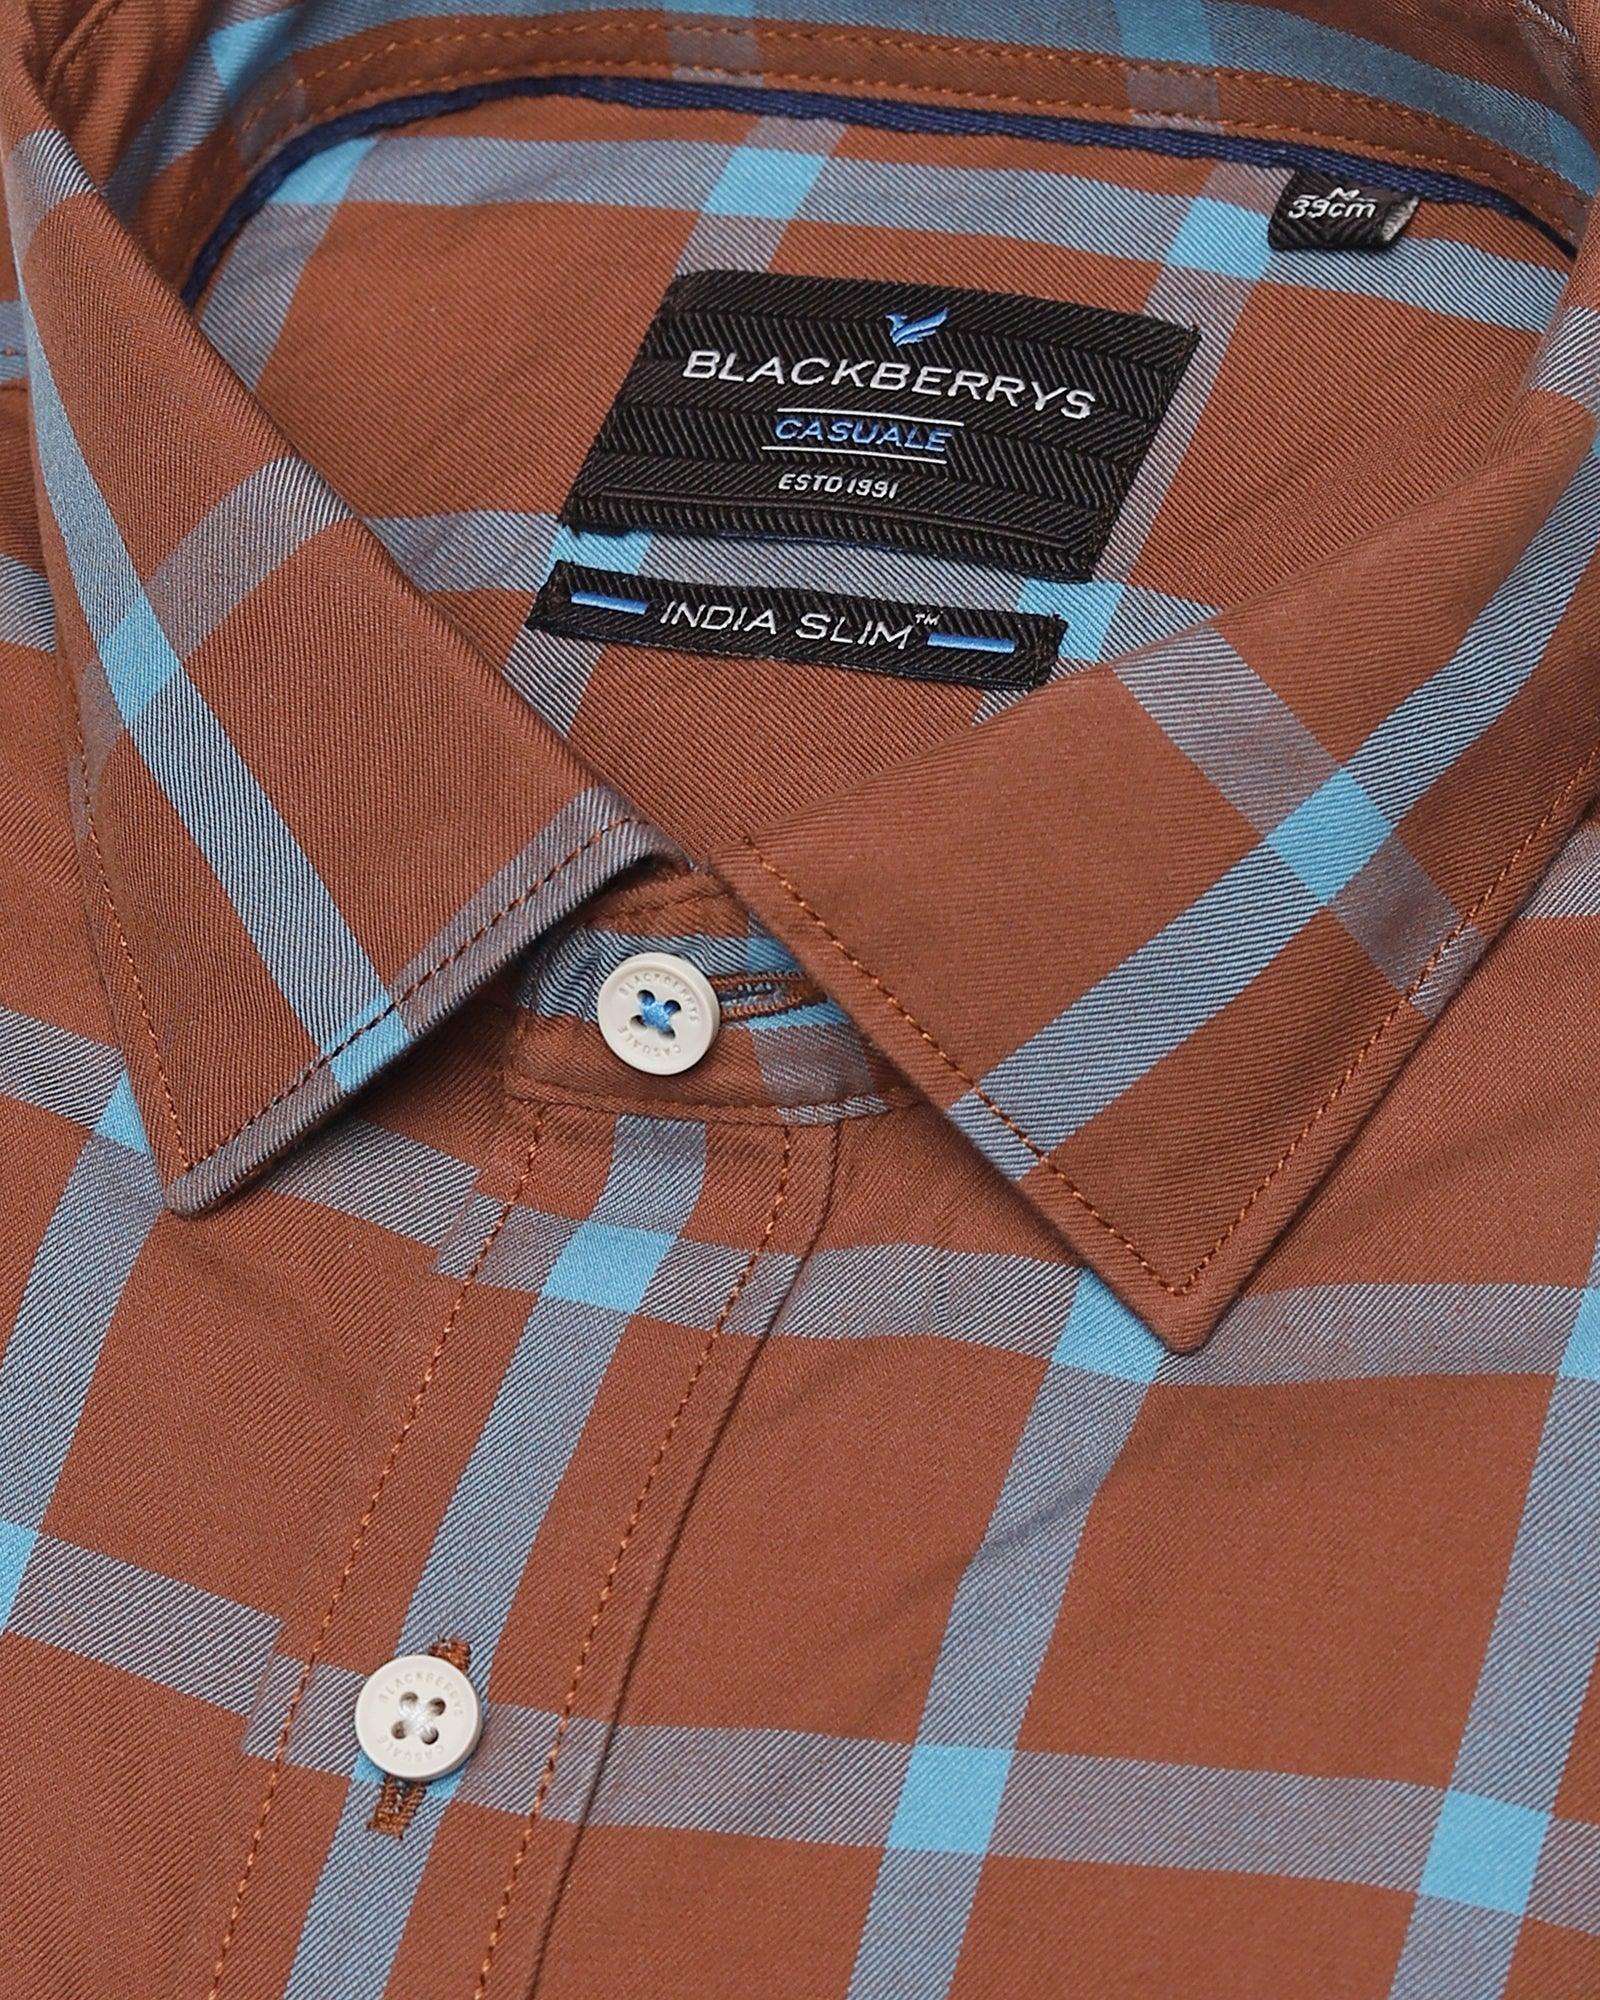 Casual Brown Check Shirt - Grafton